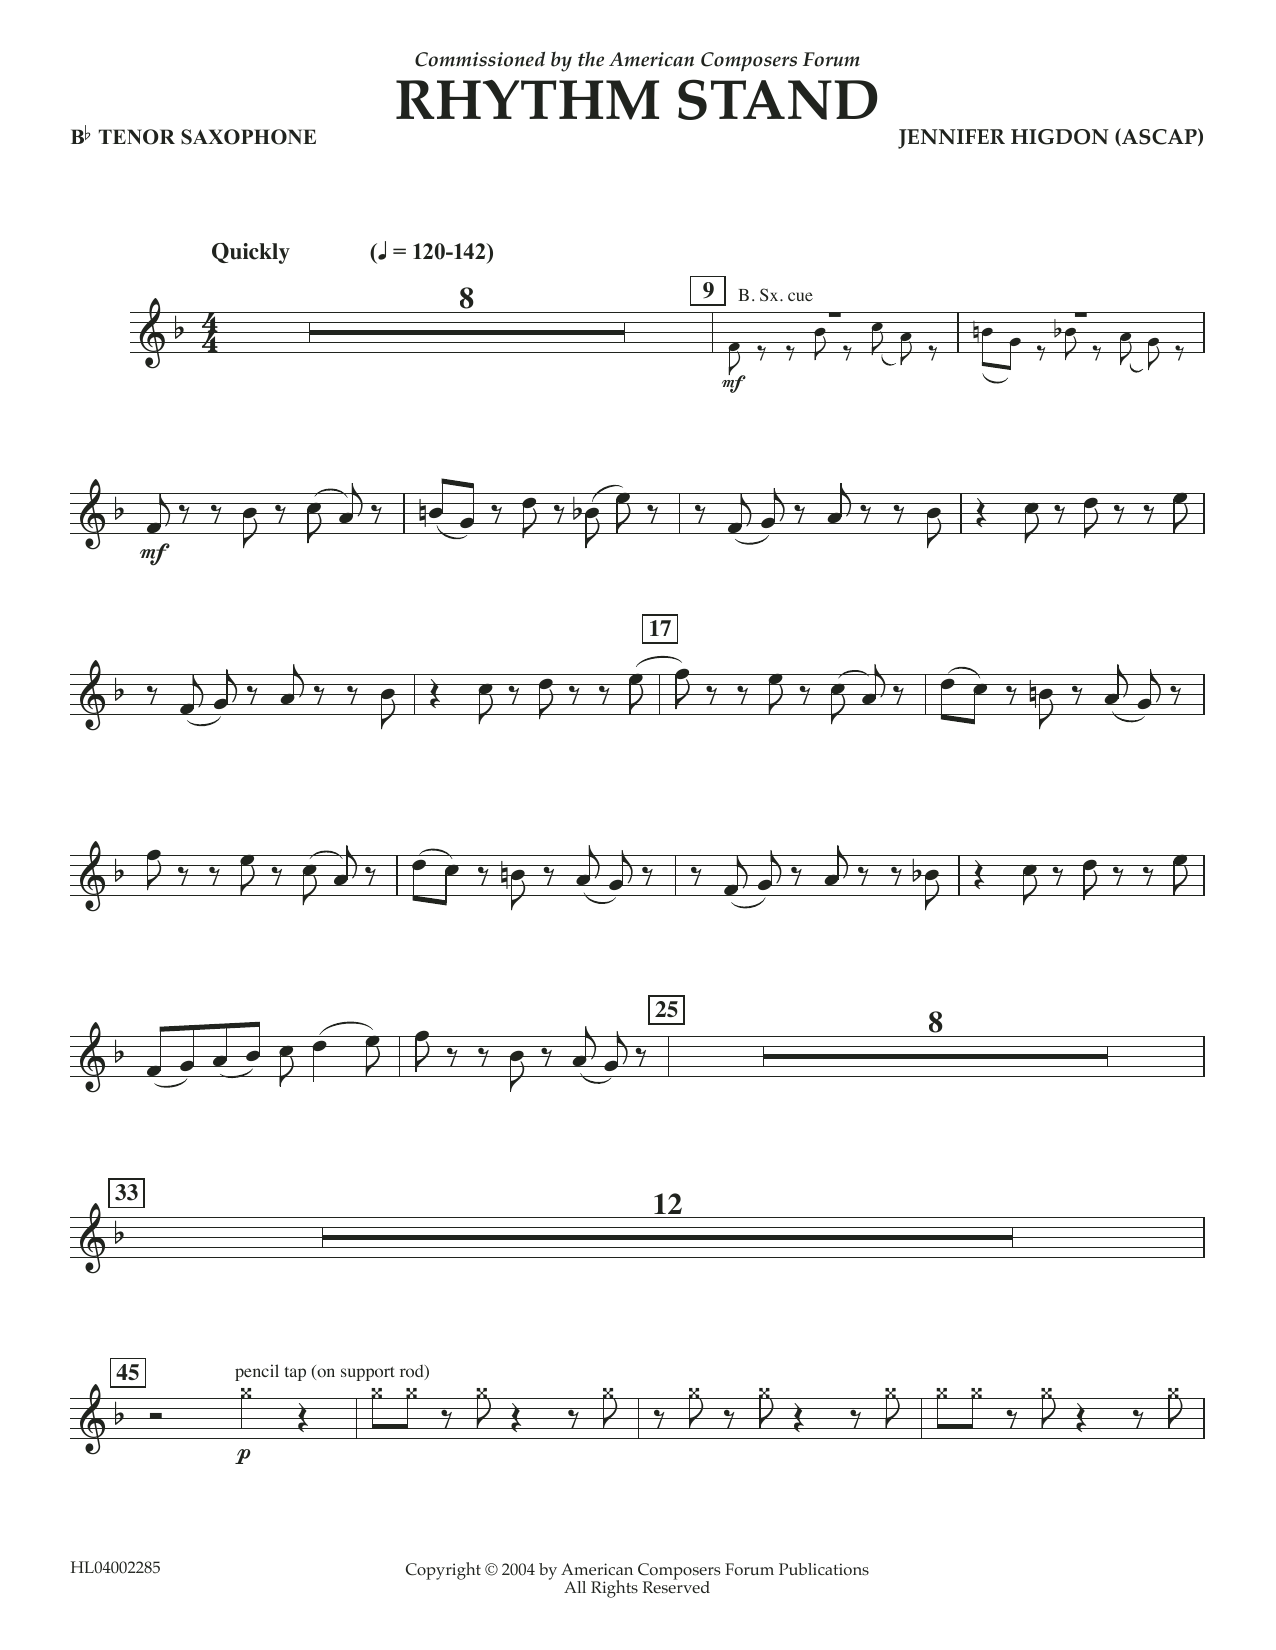 Jennifer Higdon Rhythm Stand - Bb Tenor Saxophone Sheet Music Notes & Chords for Concert Band - Download or Print PDF